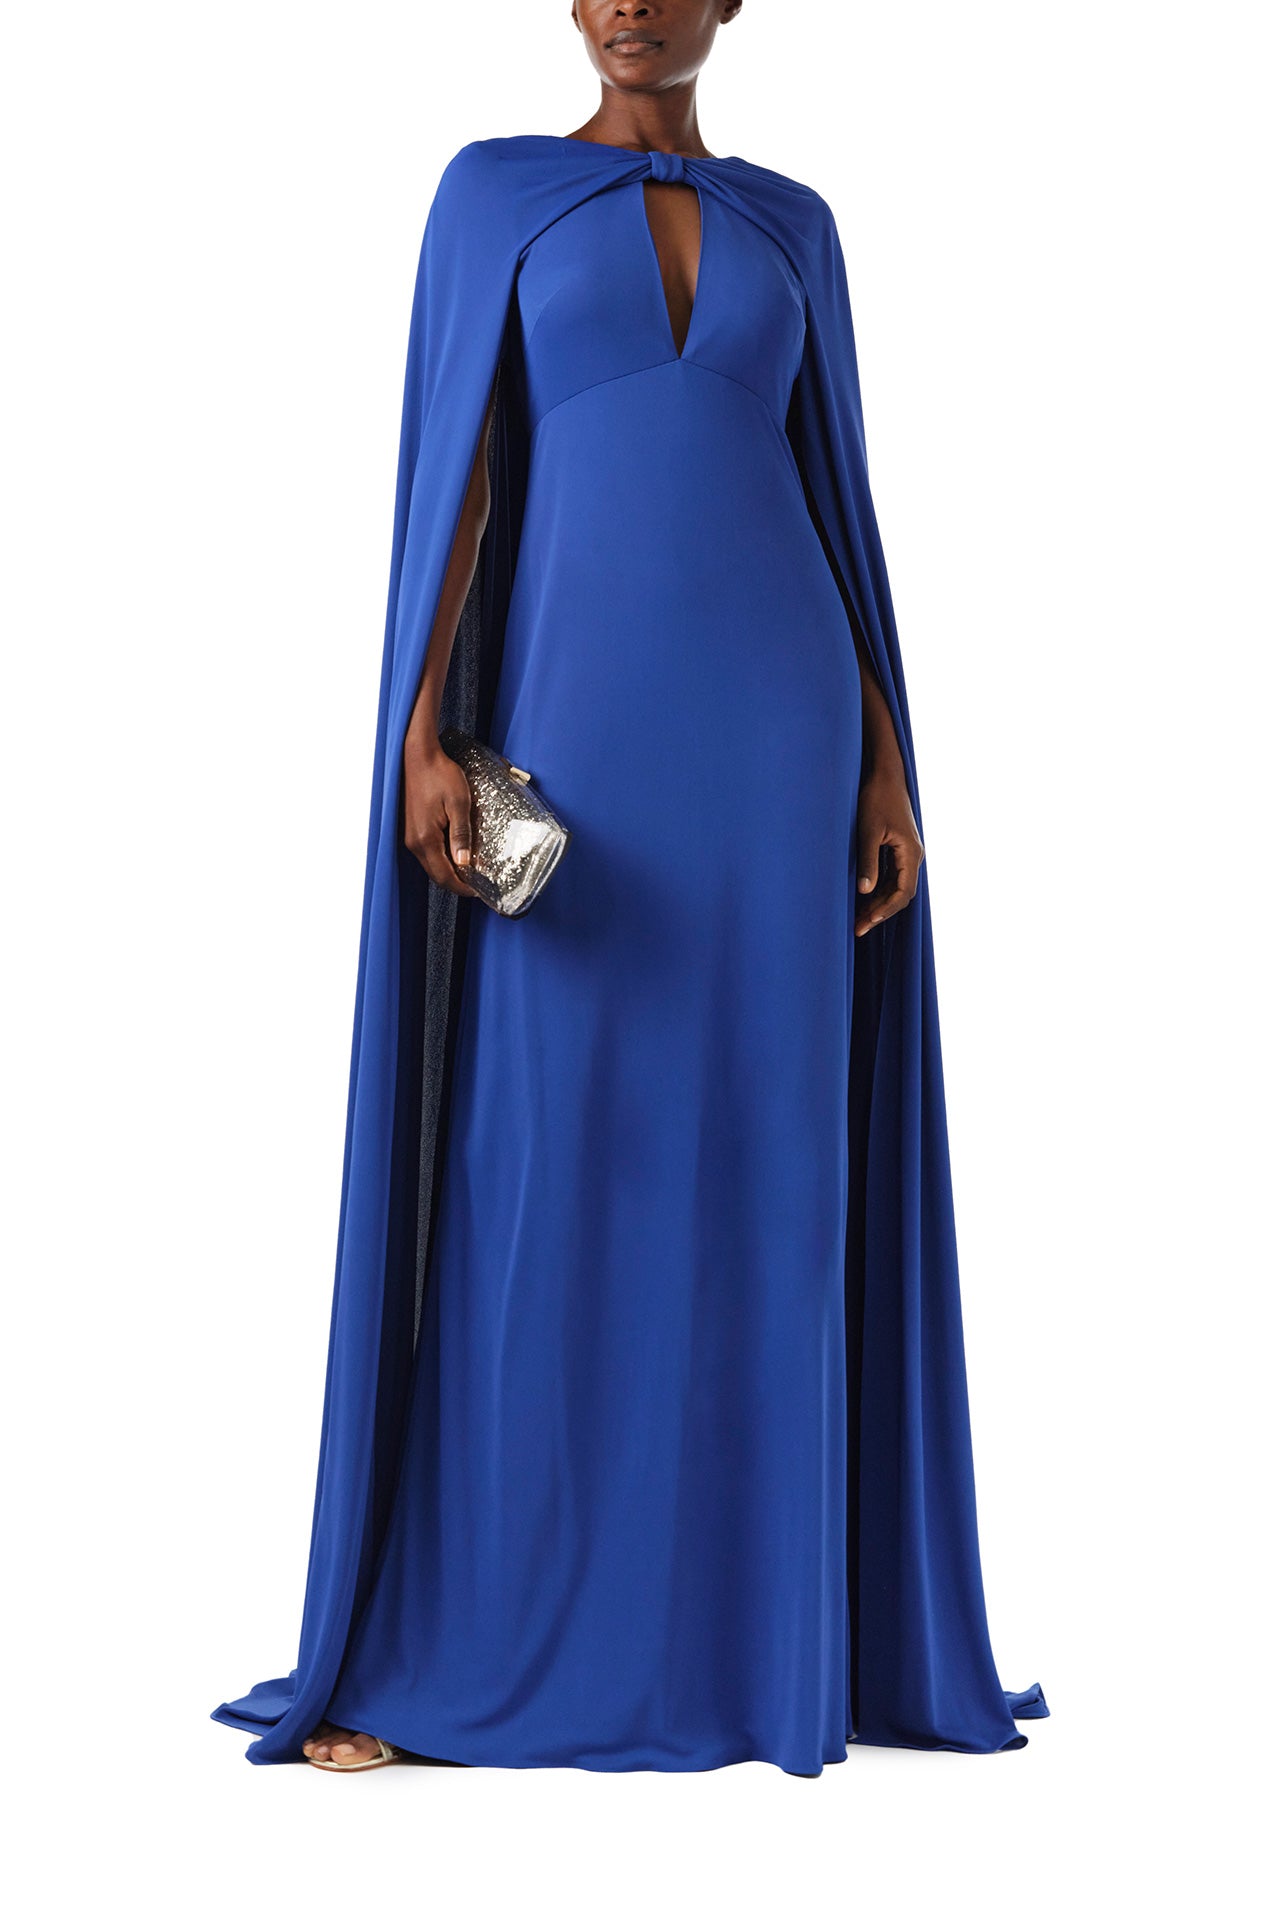 Betsy & Adam Women's Chiffon Cape Gown Blue Size 4 - Walmart.com